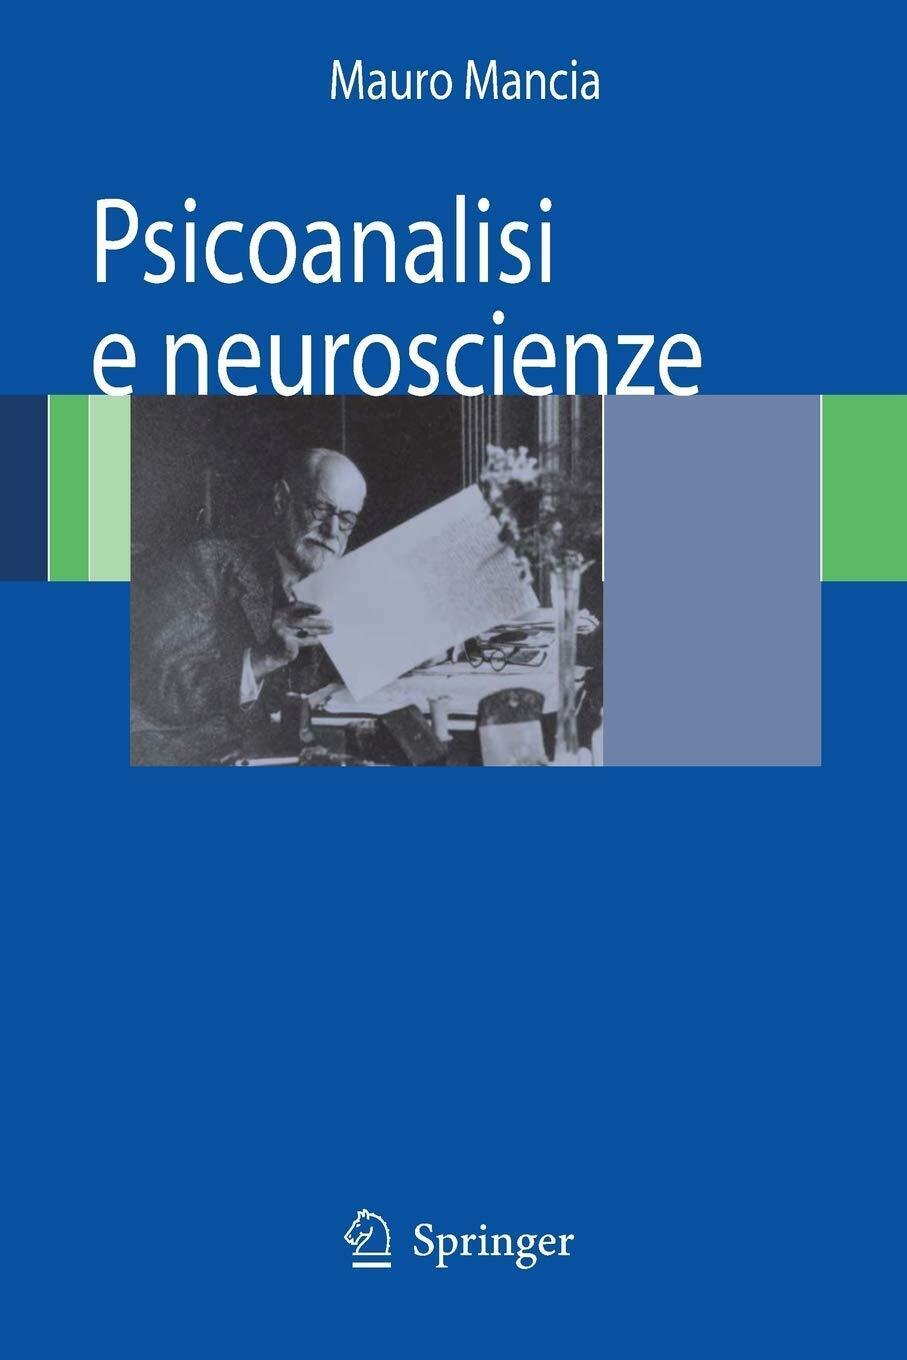 Psicoanalisi e neuroscienze - M. Mancia  - Springer, 2007